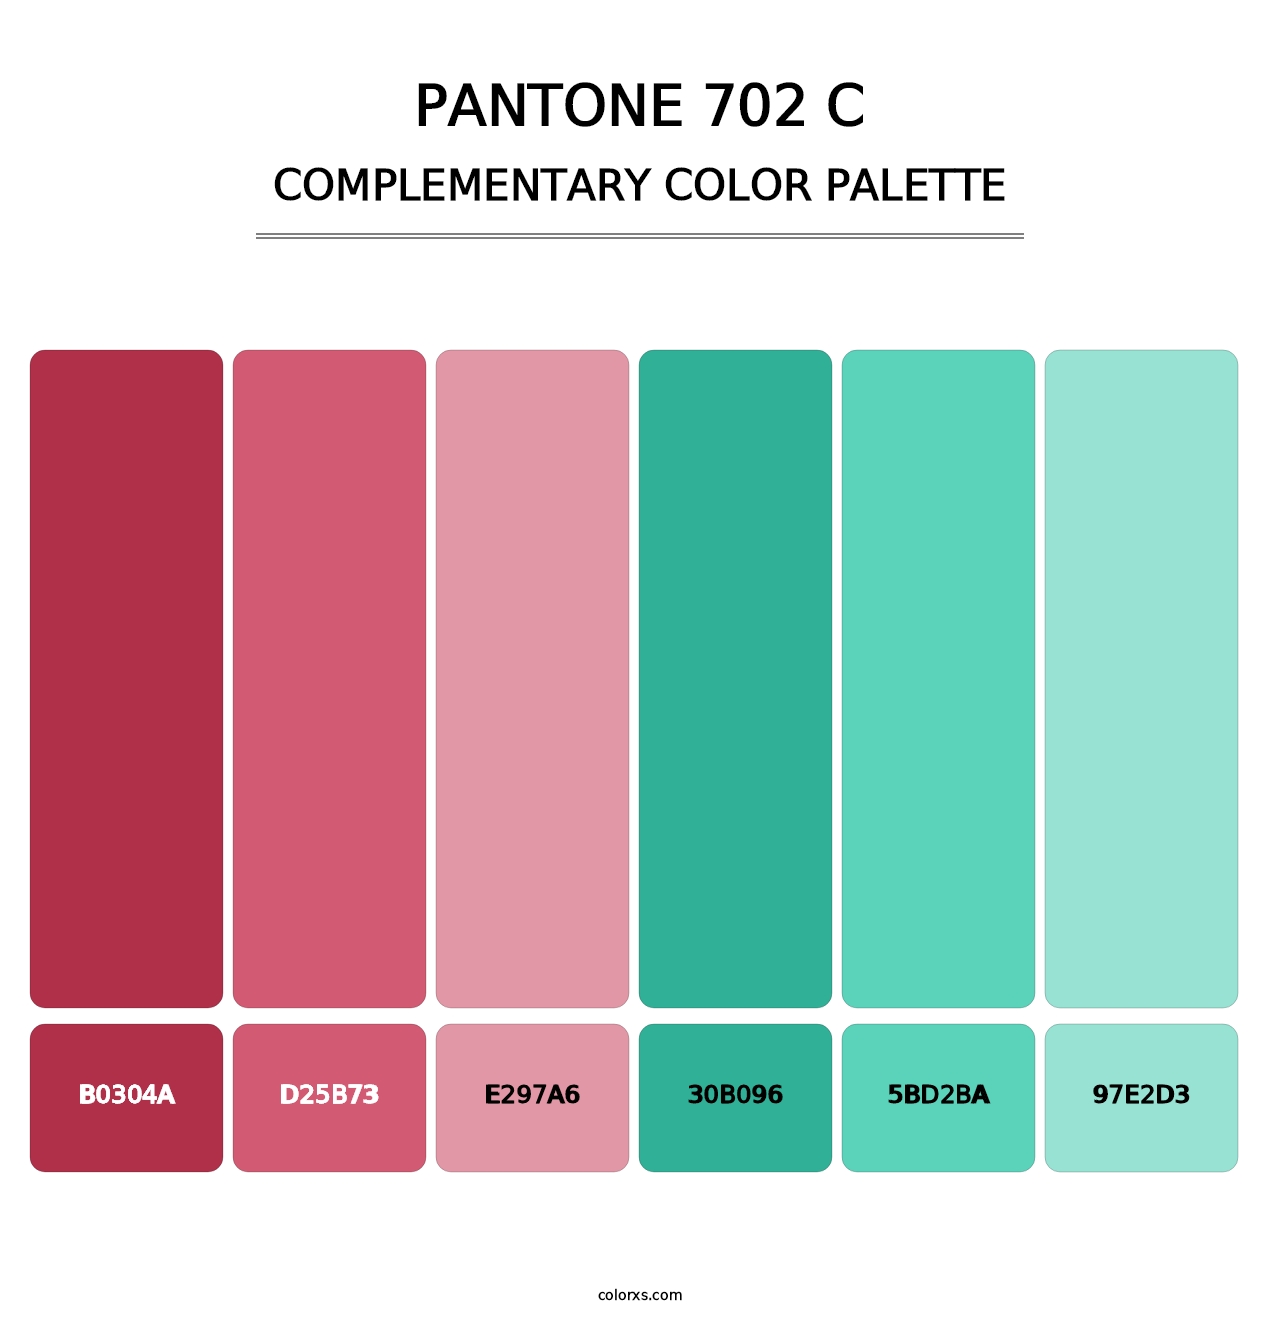 PANTONE 702 C - Complementary Color Palette